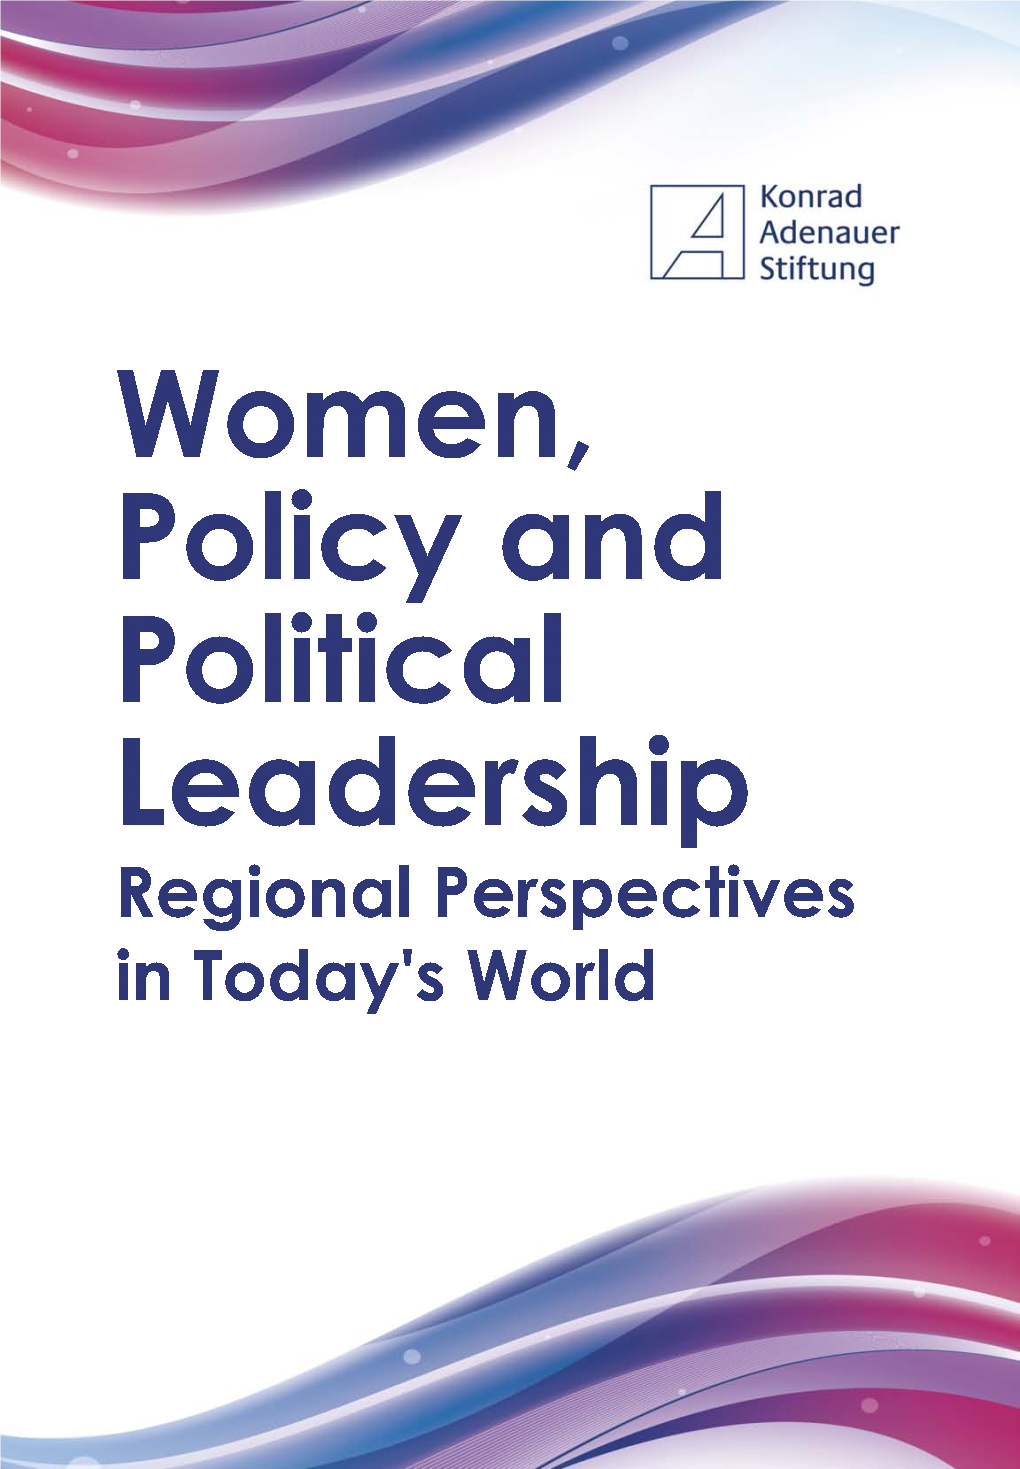 Women in Politics 22 the World Economic Forum (WEF) Global Gender Gap 24 Rankings 2014 the Electoral Quota World Map 25